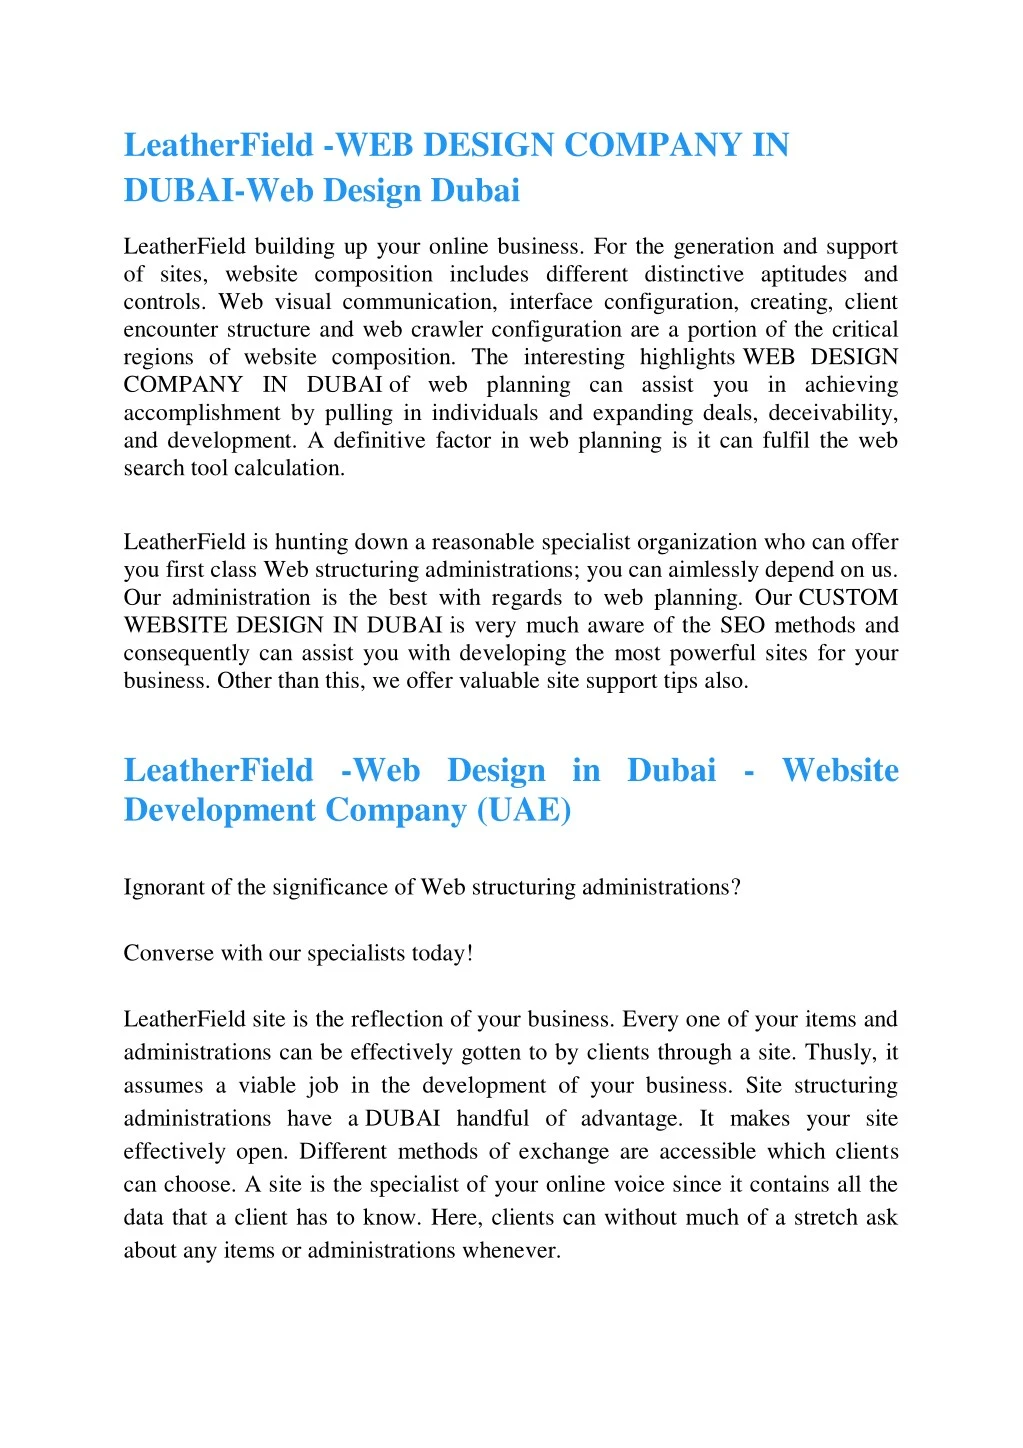 leatherfield web design company in dubai